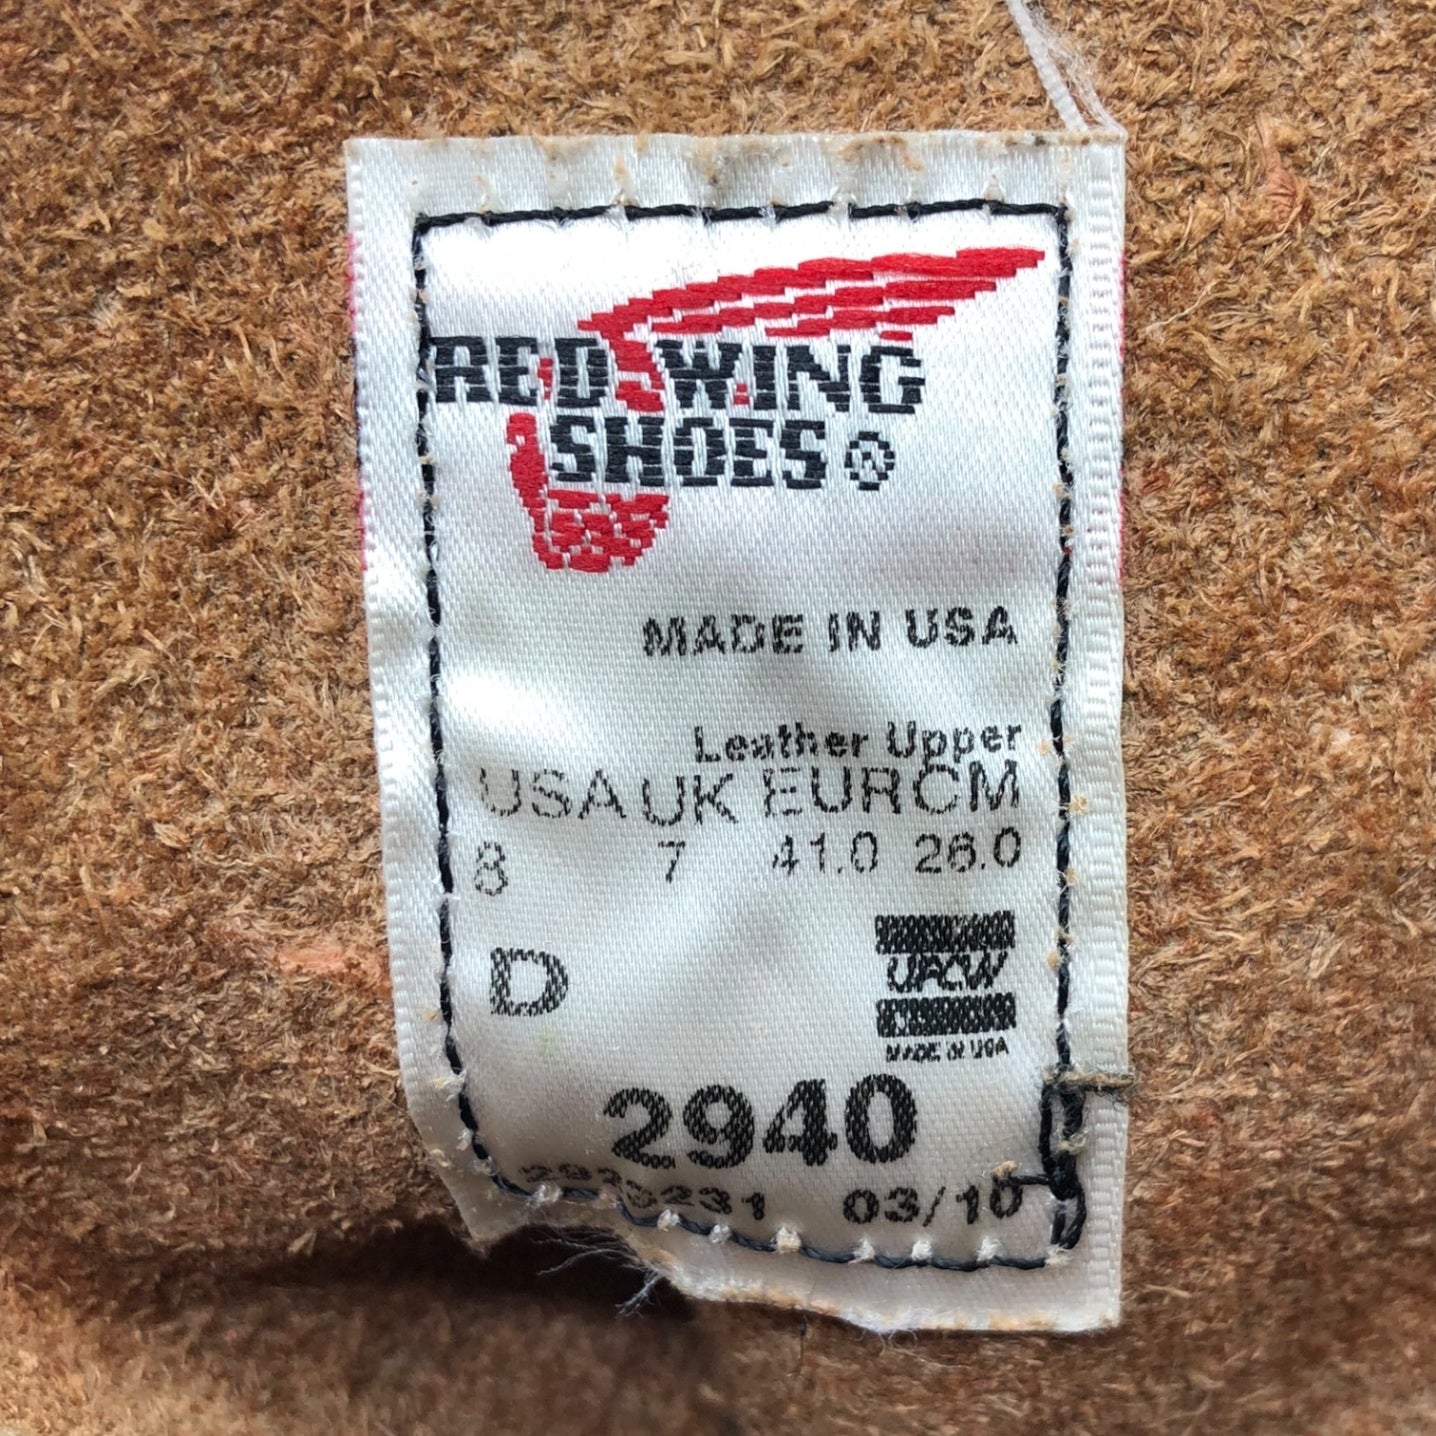 REDWING(レッドウィング) 8” CLASSIC ROUND クラシック ラウンド ワーク ブーツ 2940 8(26cm) ブラウン